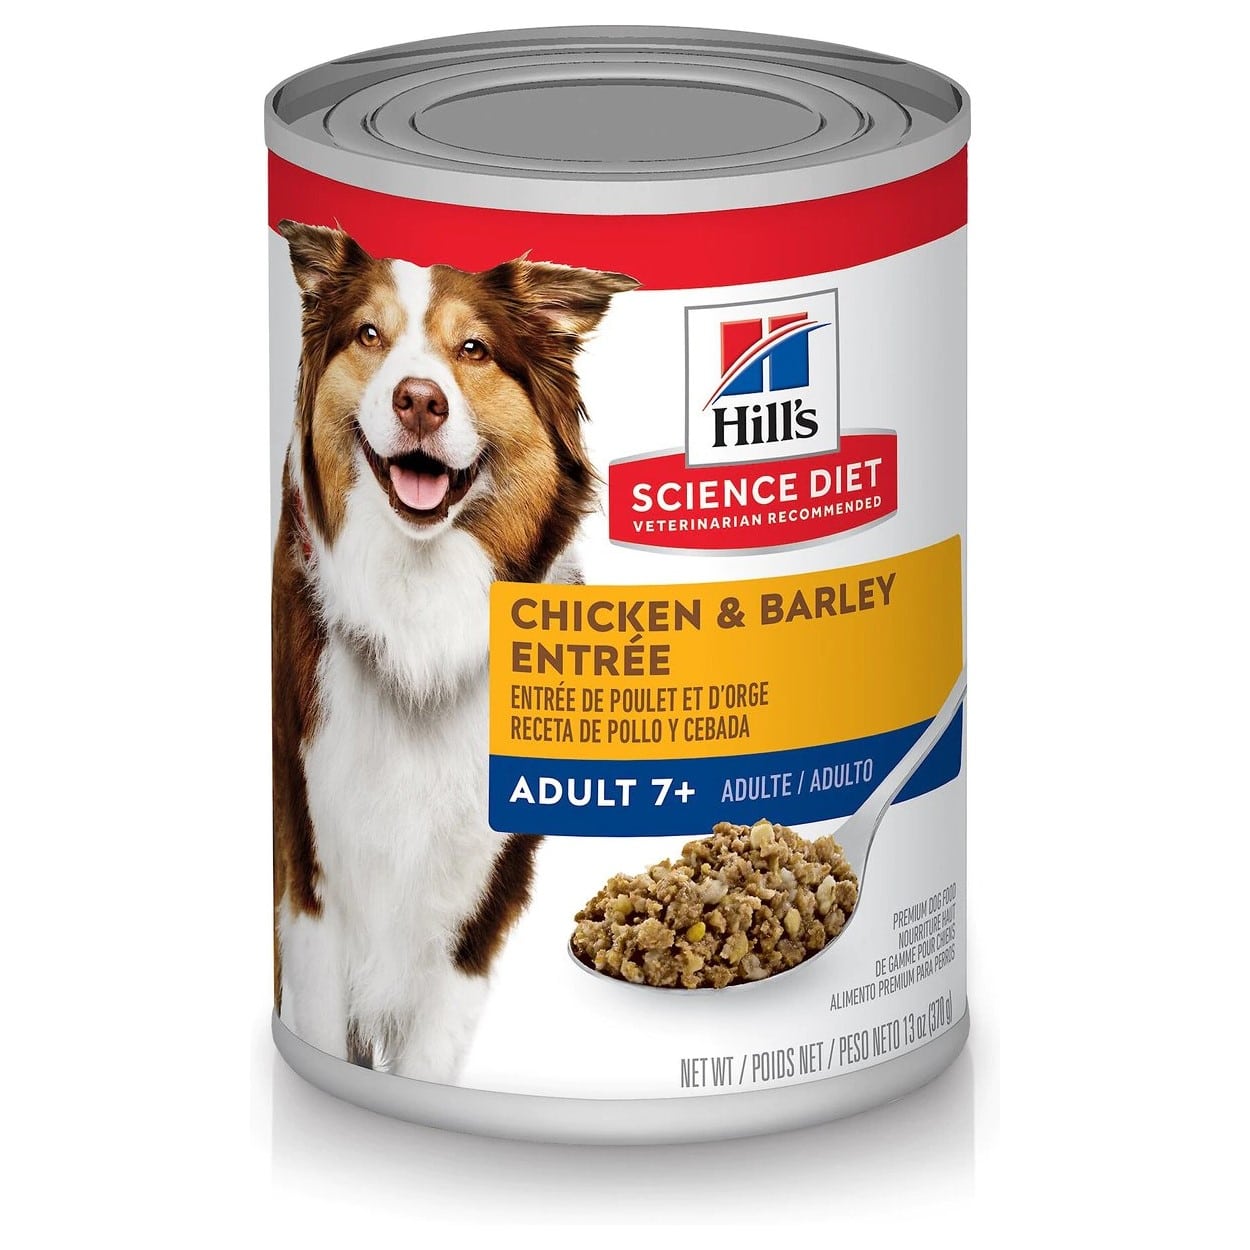 Hill's Science Diet Senior 7+ Canned Dog Food, Chicken & Barley Entrée